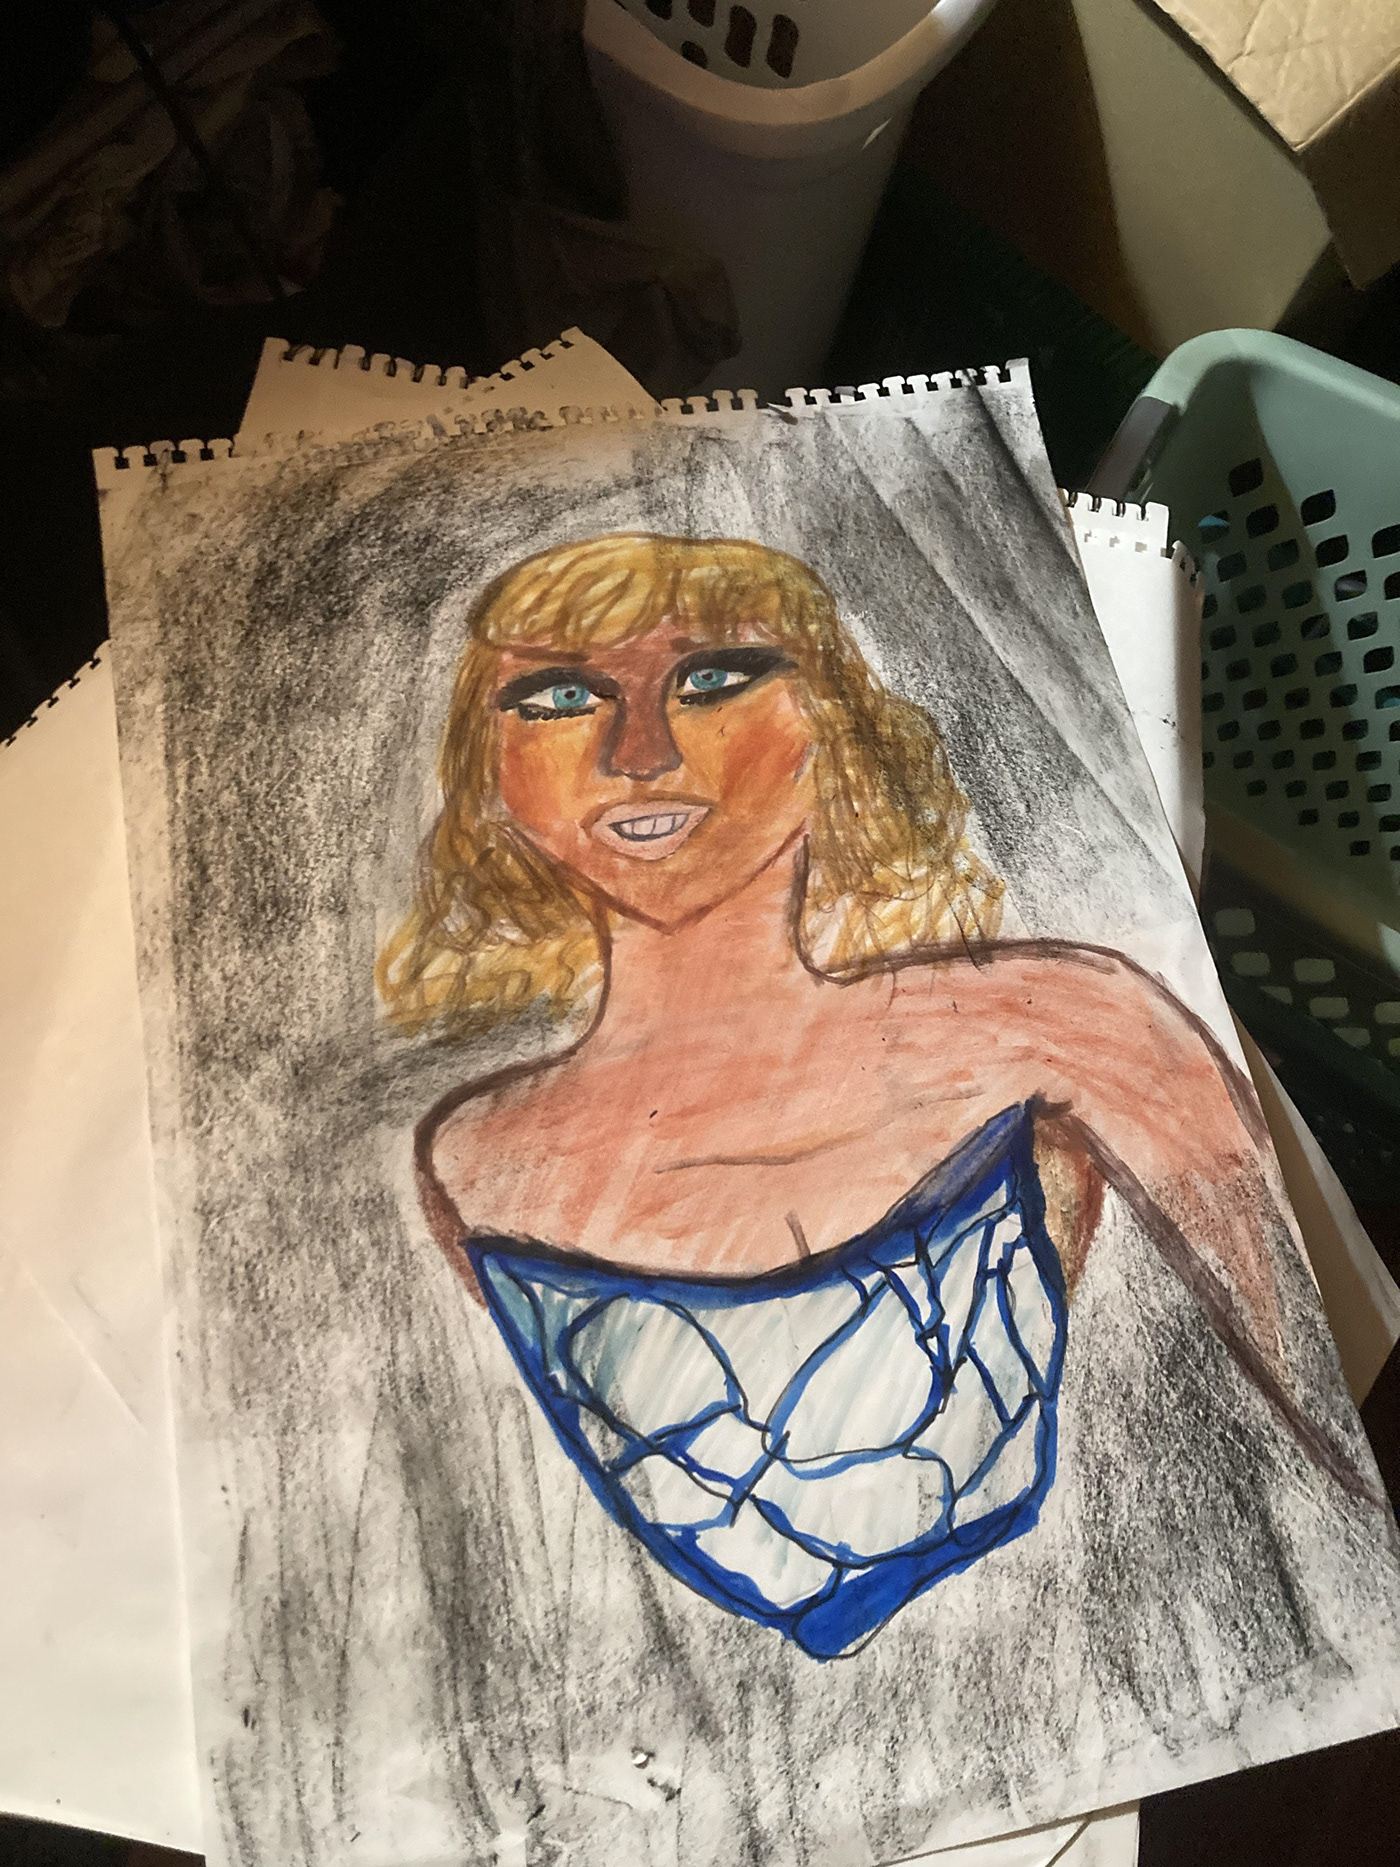 Taylor Swift drawing